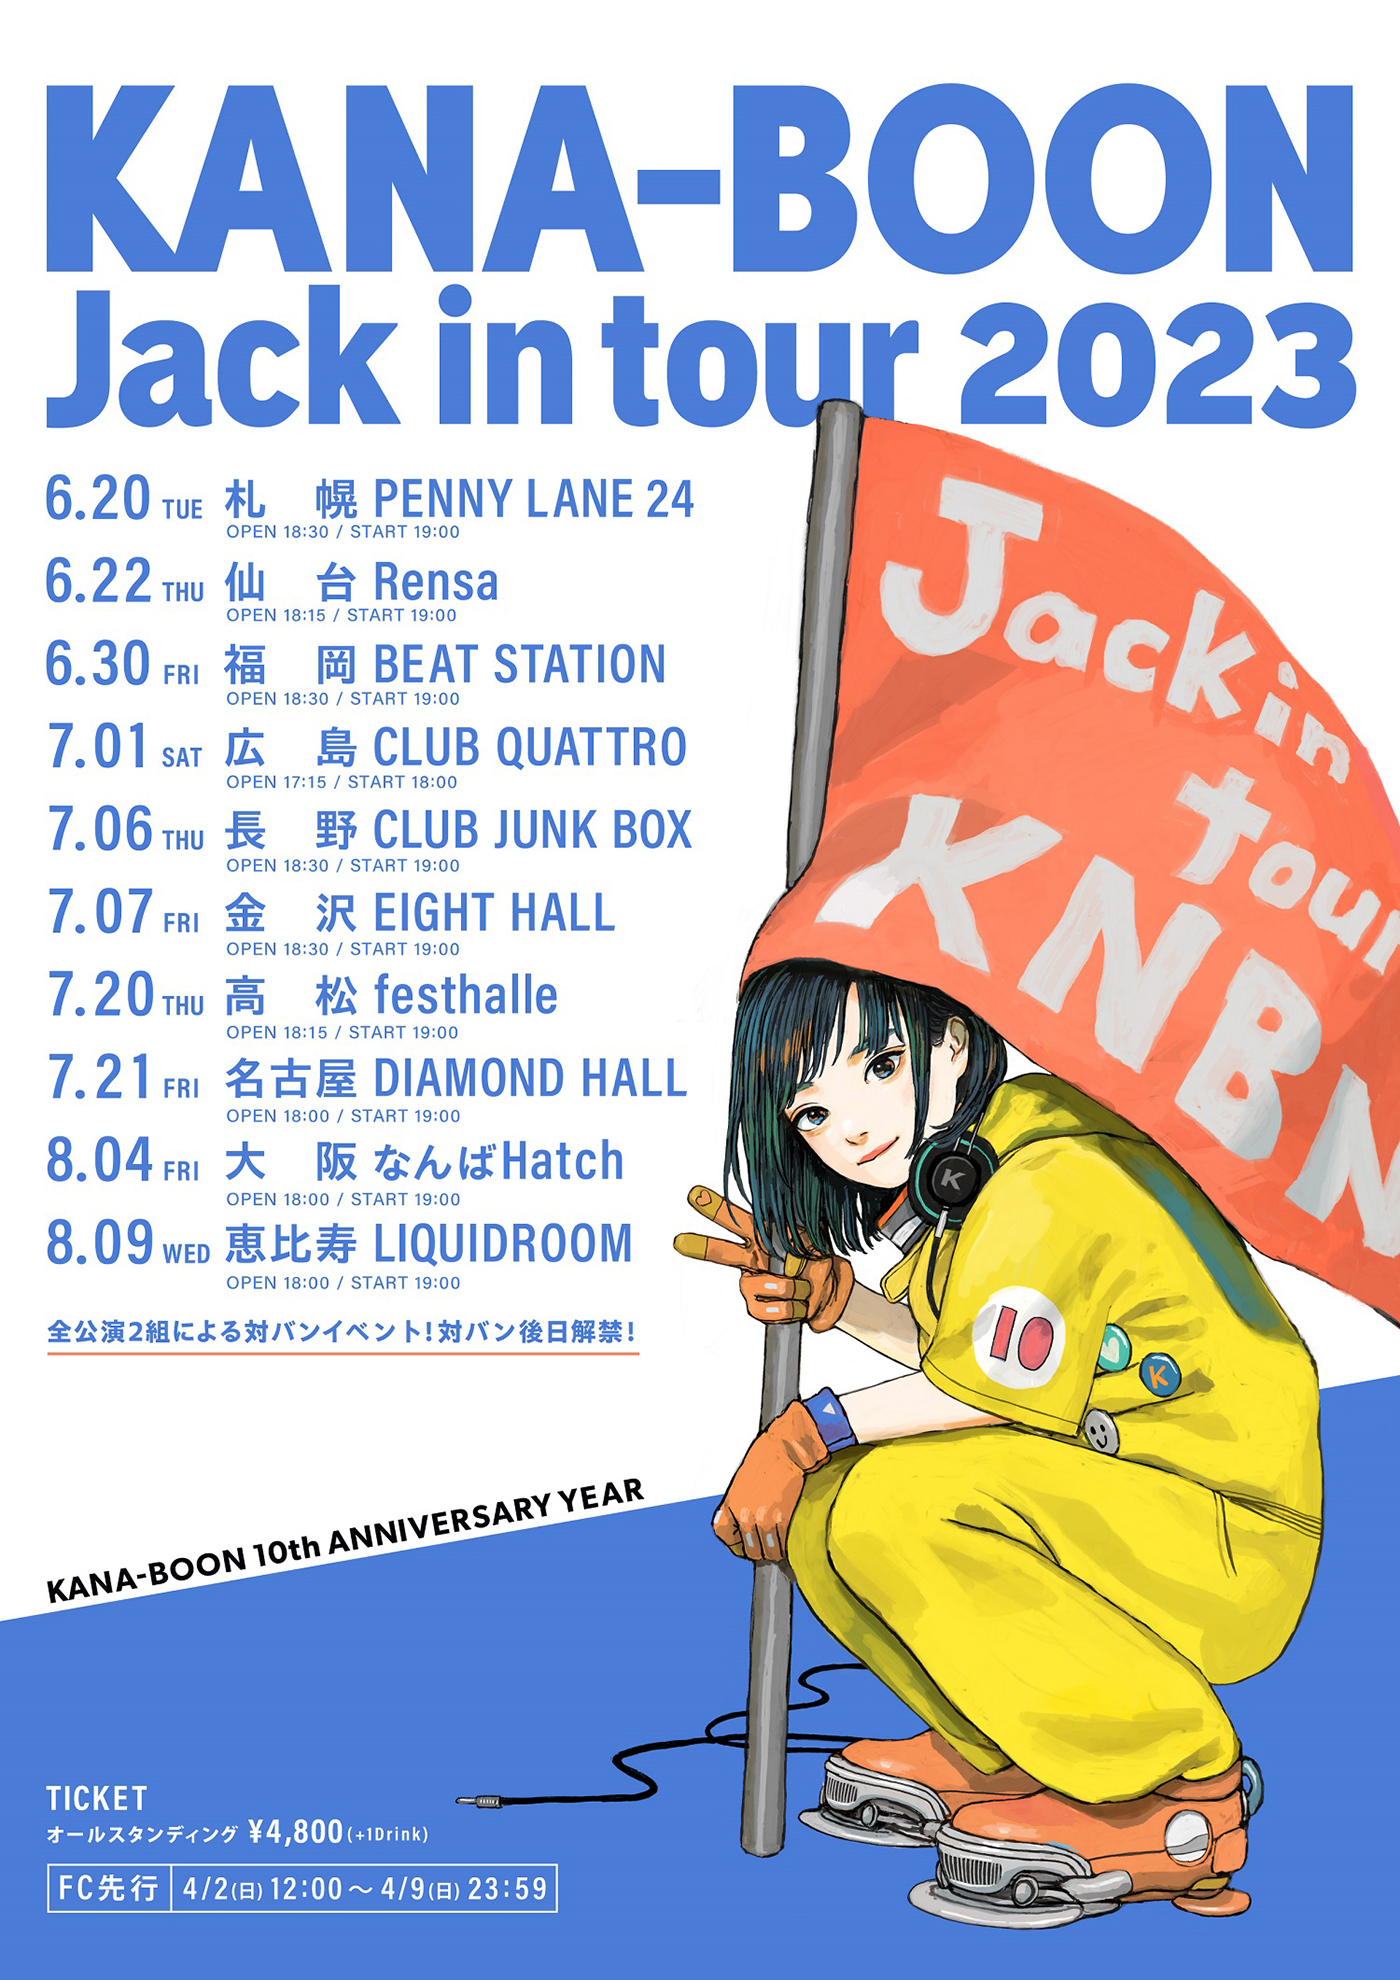 KANA-BOON、対バンツアー『KANA-BOON Jack in tour 2023』の開催が決定 - 画像一覧（3/4）